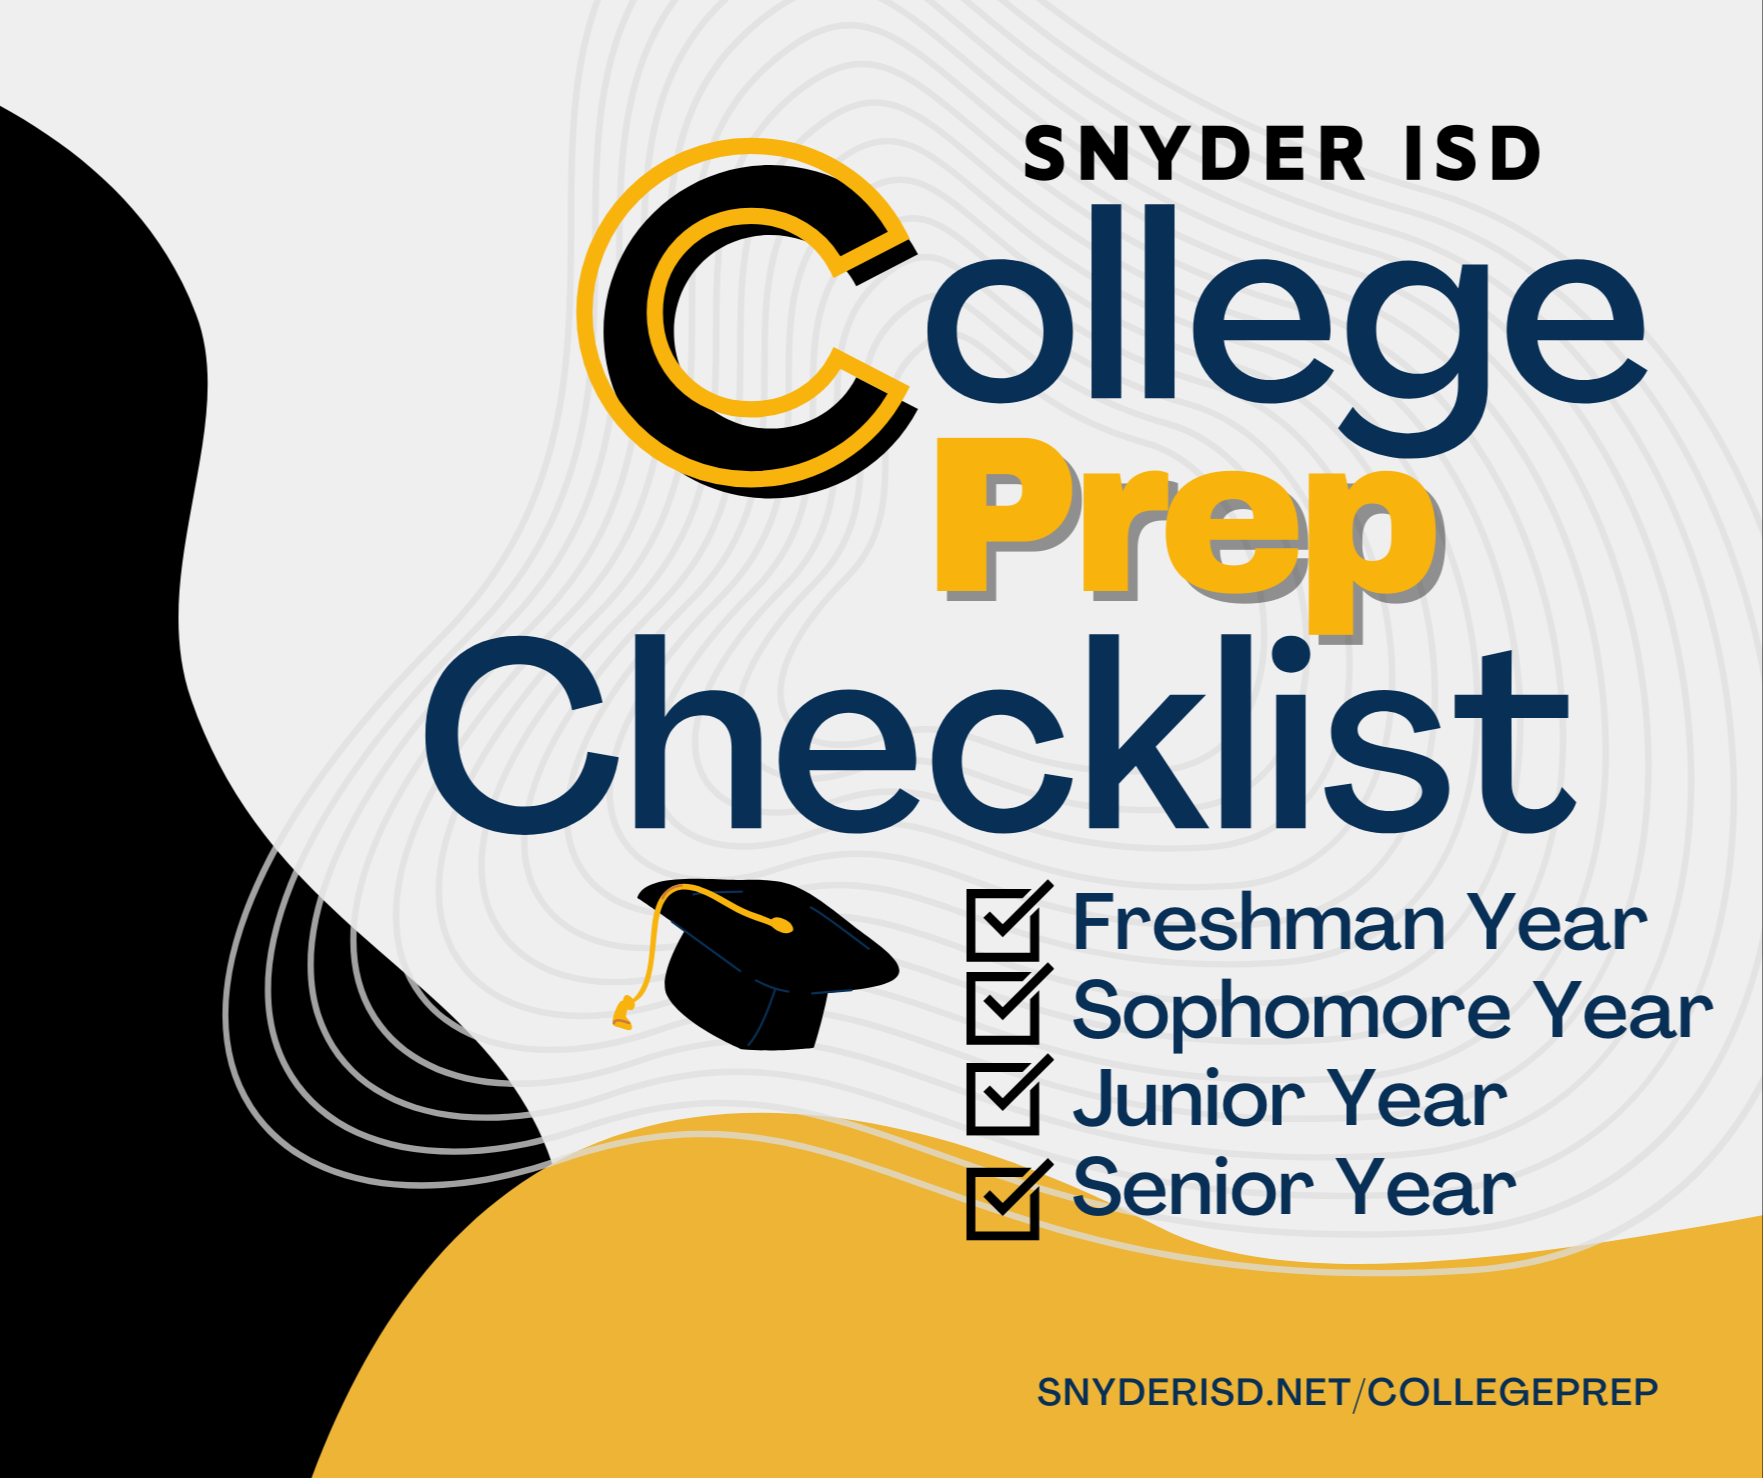 College prep checklist graphic - checkboxes next to freshman, sophomore, junior, and senior